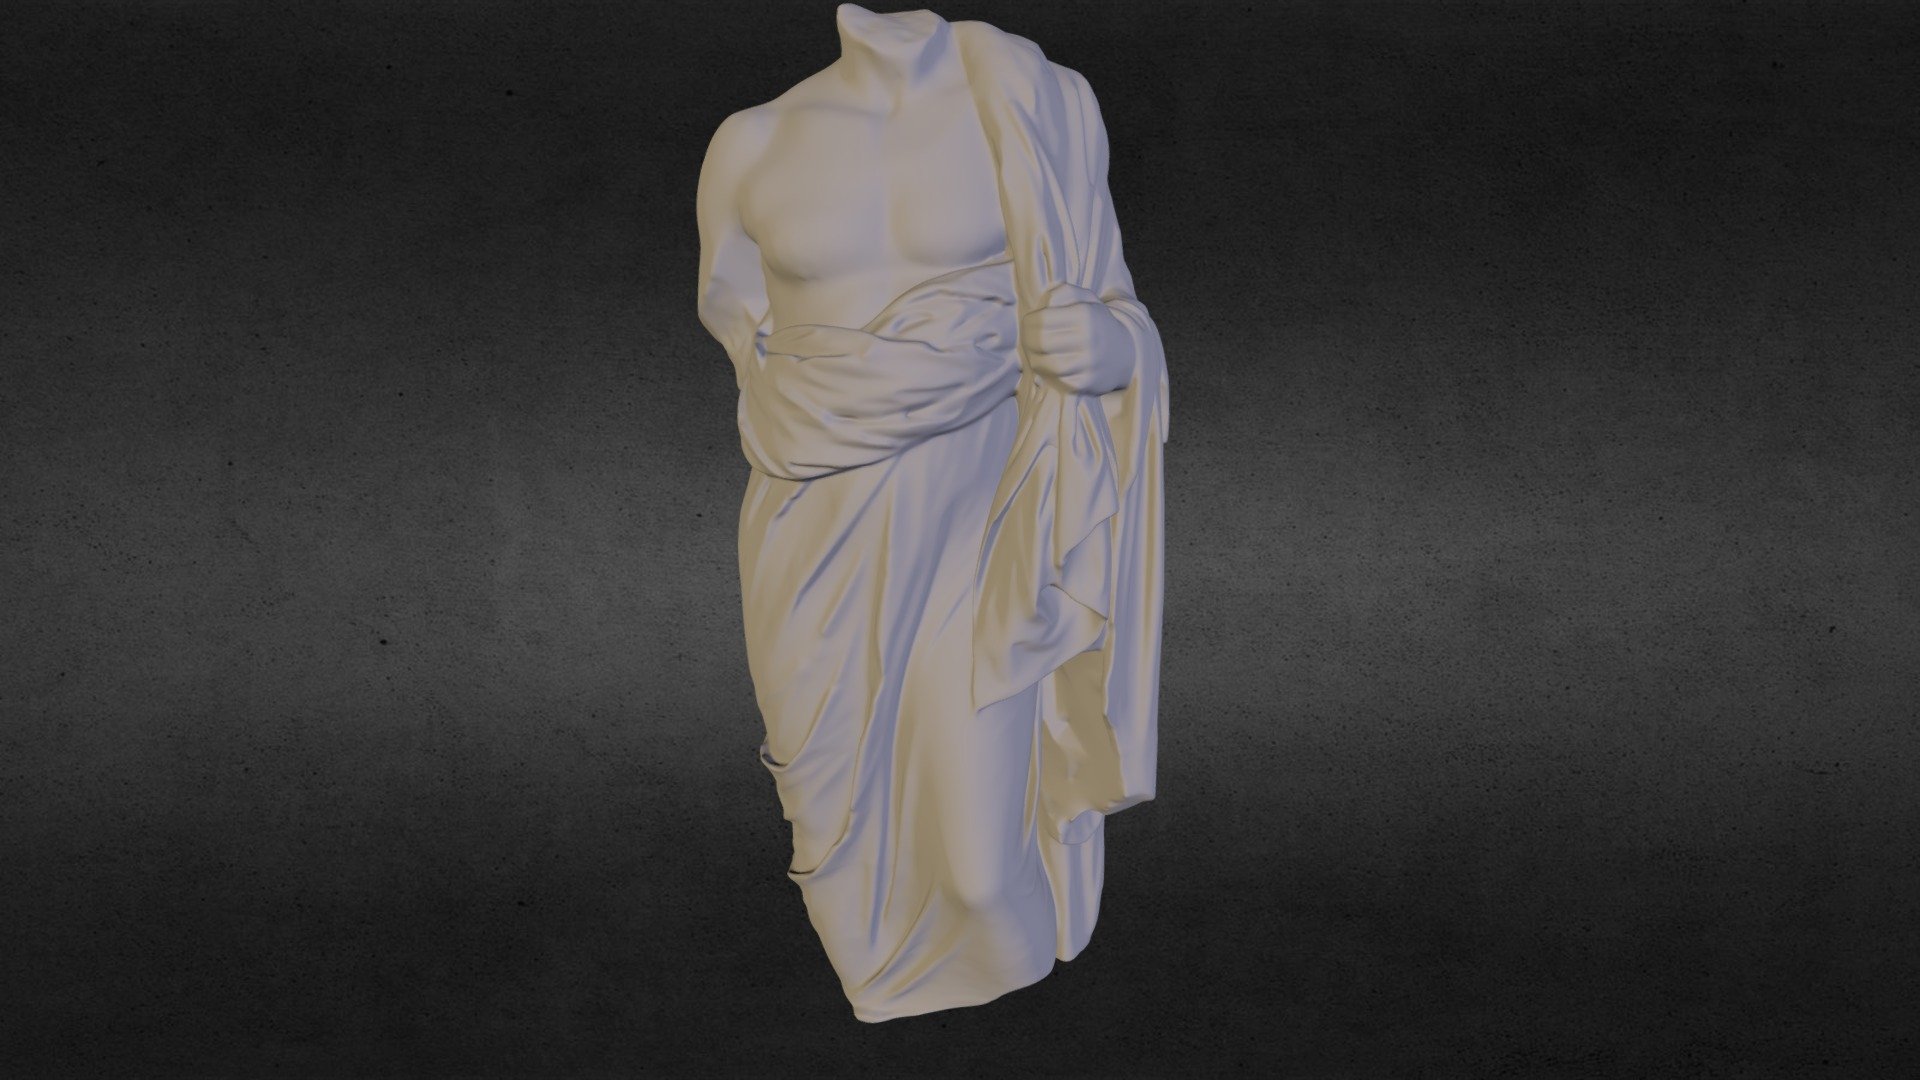 Draped Male Torso from Velanideza - 3D model by kristofkovacs [ea1c296 ...